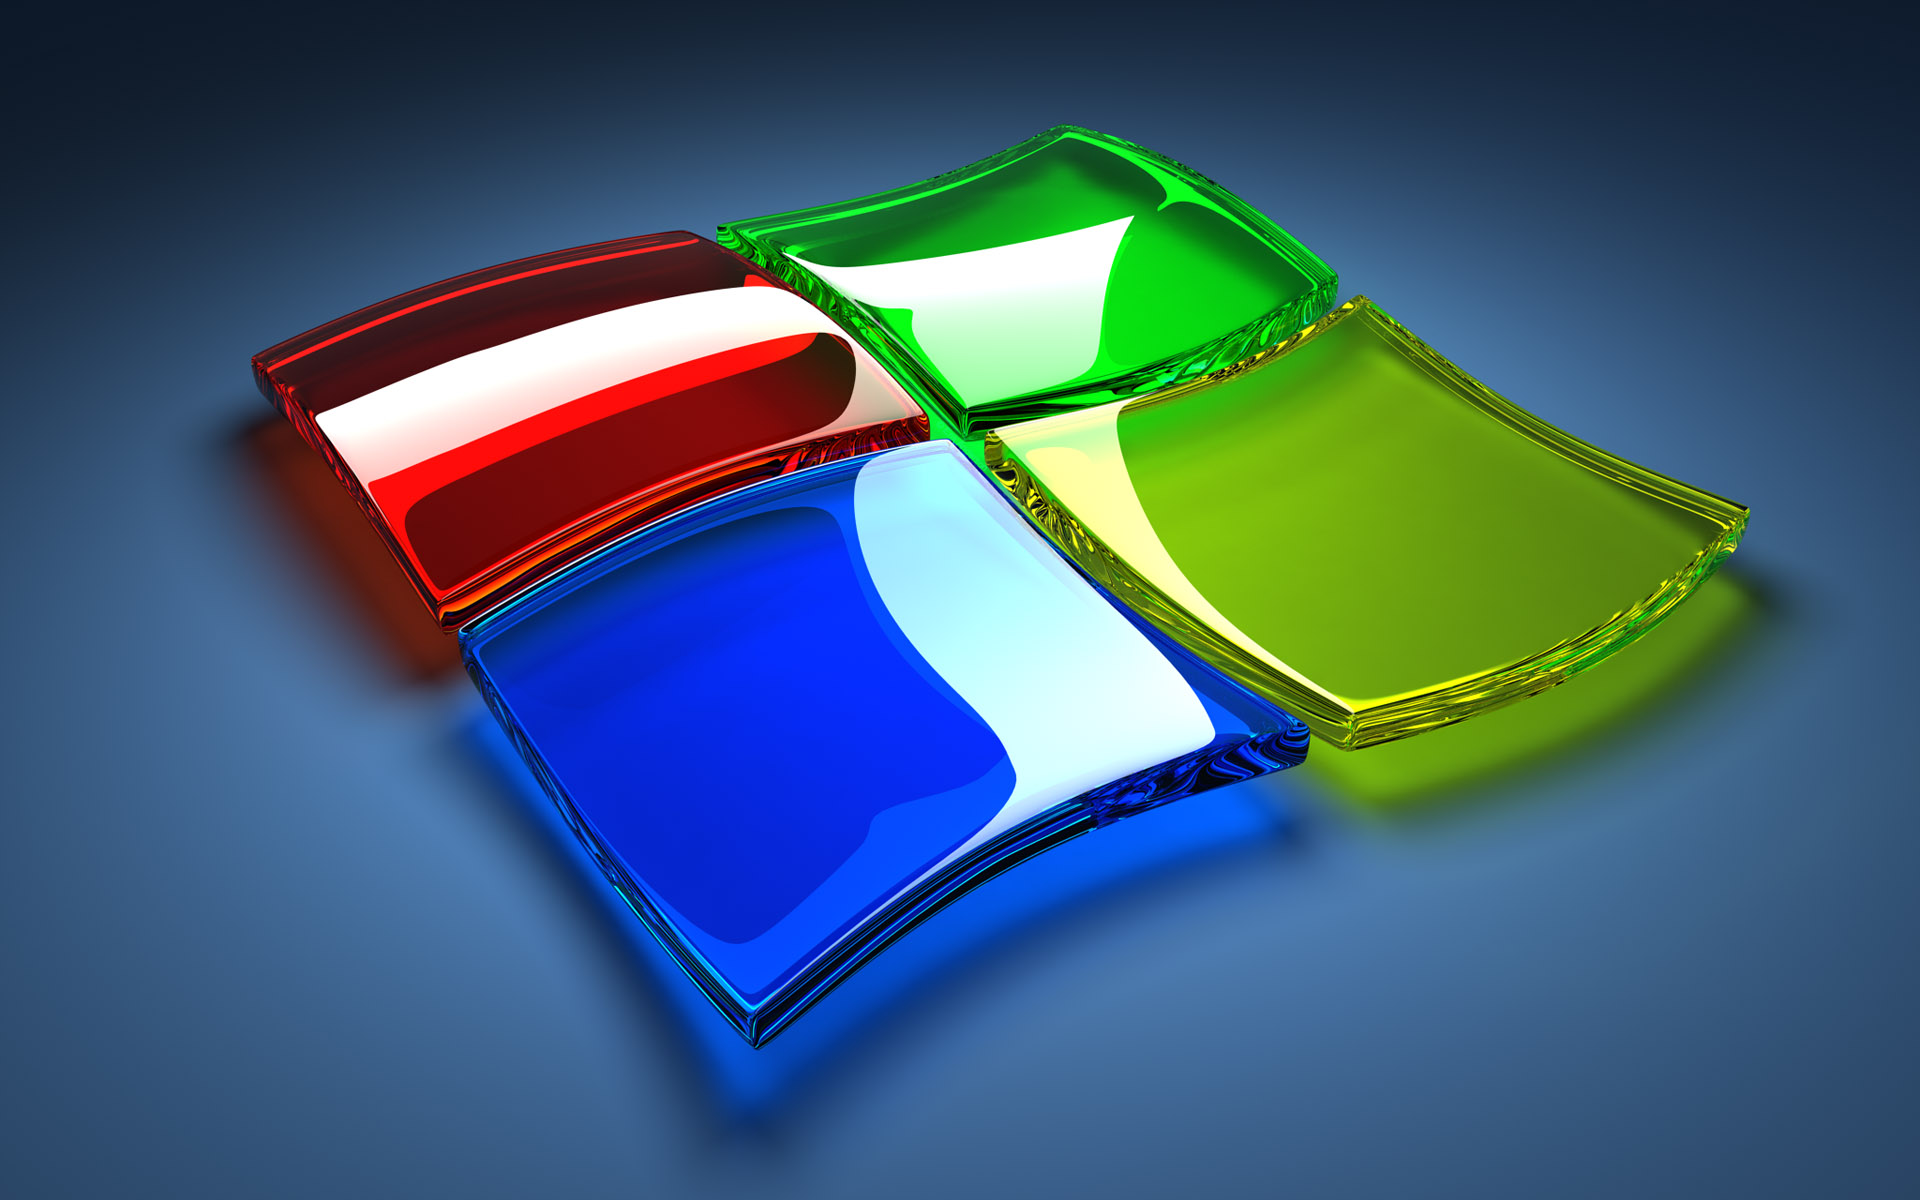 Animated Wallpaper Desktop Flag 3d For Windows Xp Vista New